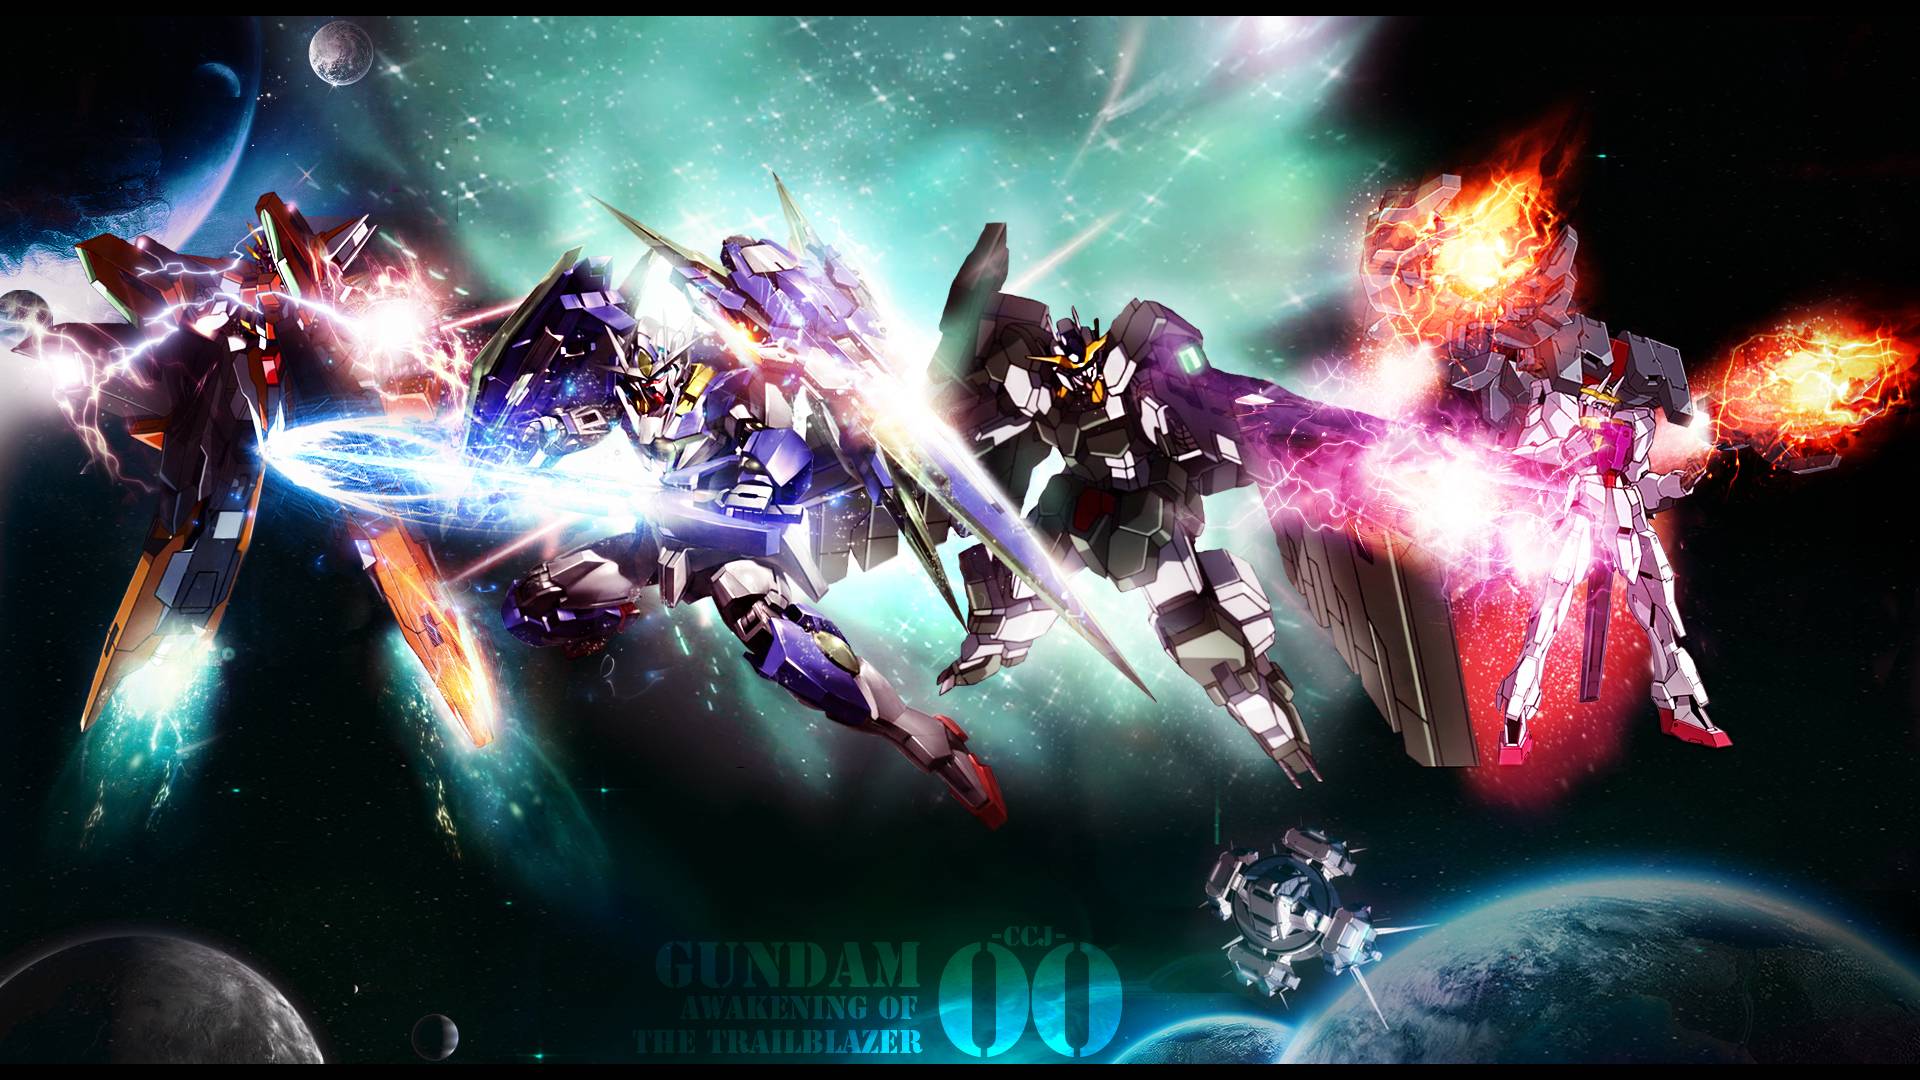 awakening of the trailblazer   Gundam 00 Wallpaper